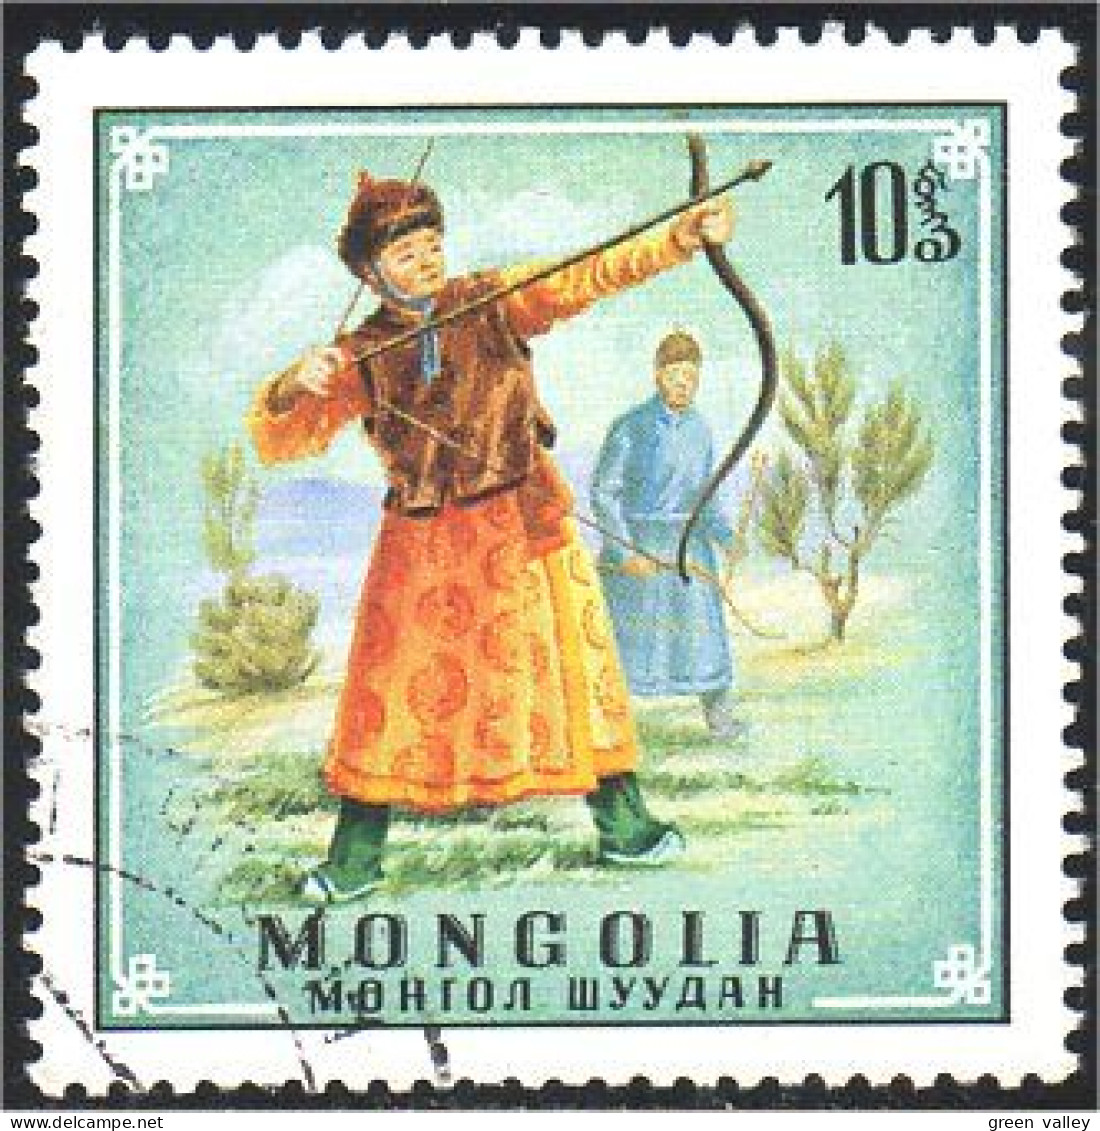 620 Mongolie Archer Traditionnel Traditional Archer (MNG-29) - Boogschieten